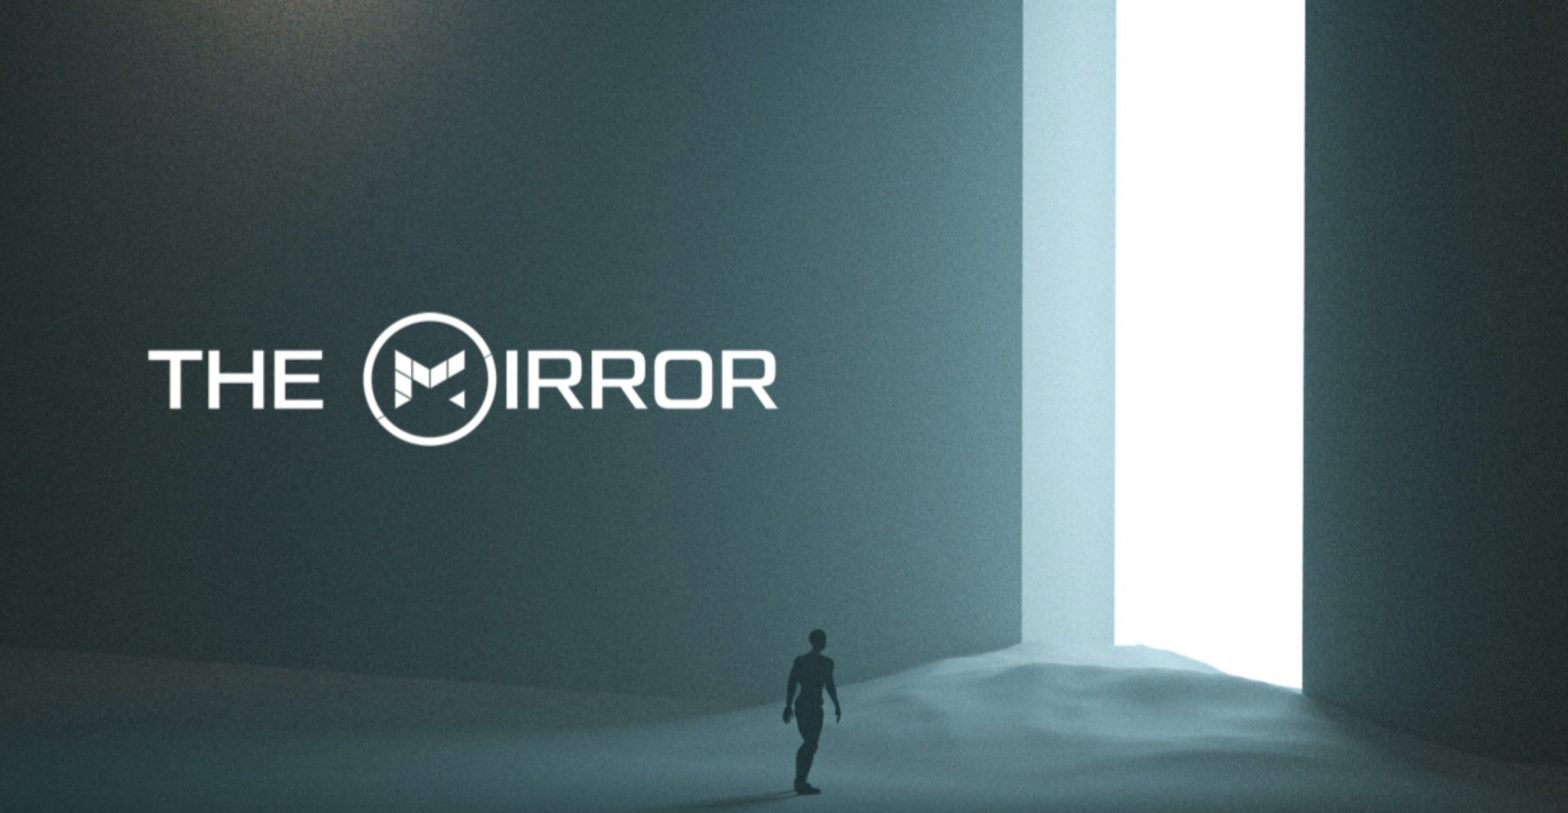 The Mirror raised $2.3 million in funding